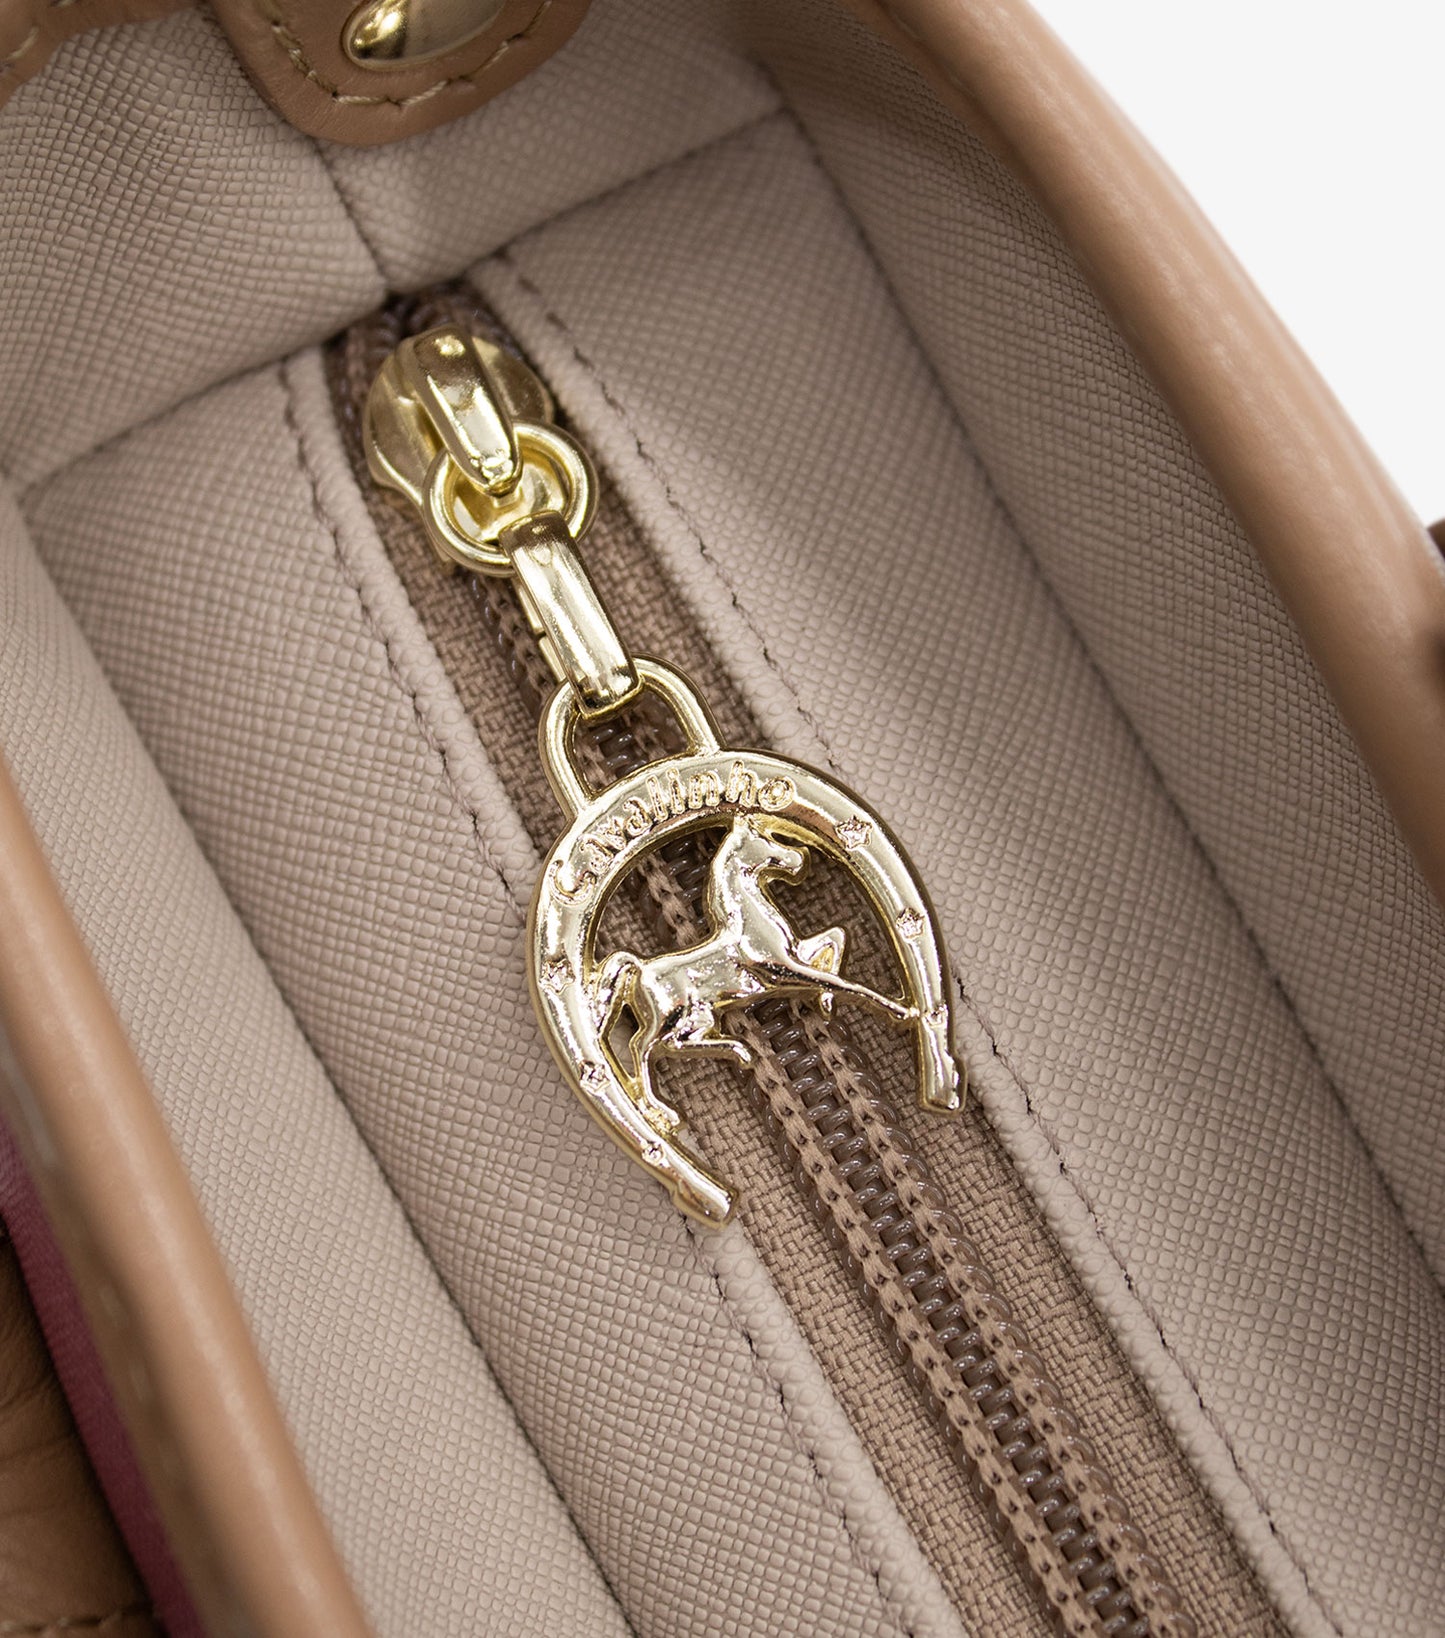 Cavalinho Allegro Mini Handbag - Beige / White / Pink - 18480243.07_P05